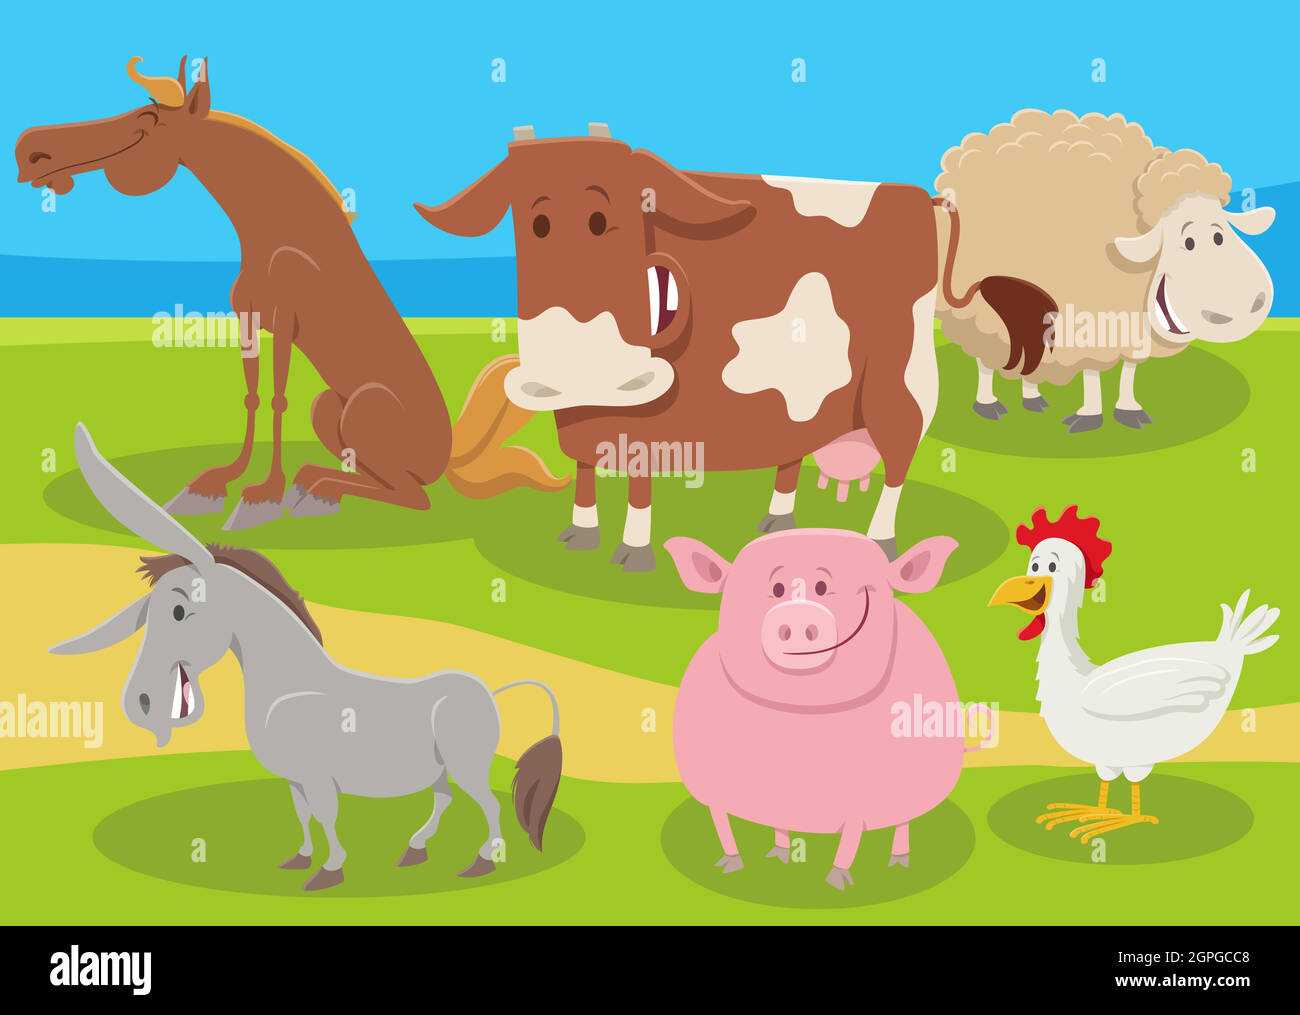 cartoon farm animals group in the countryside Stock Vector